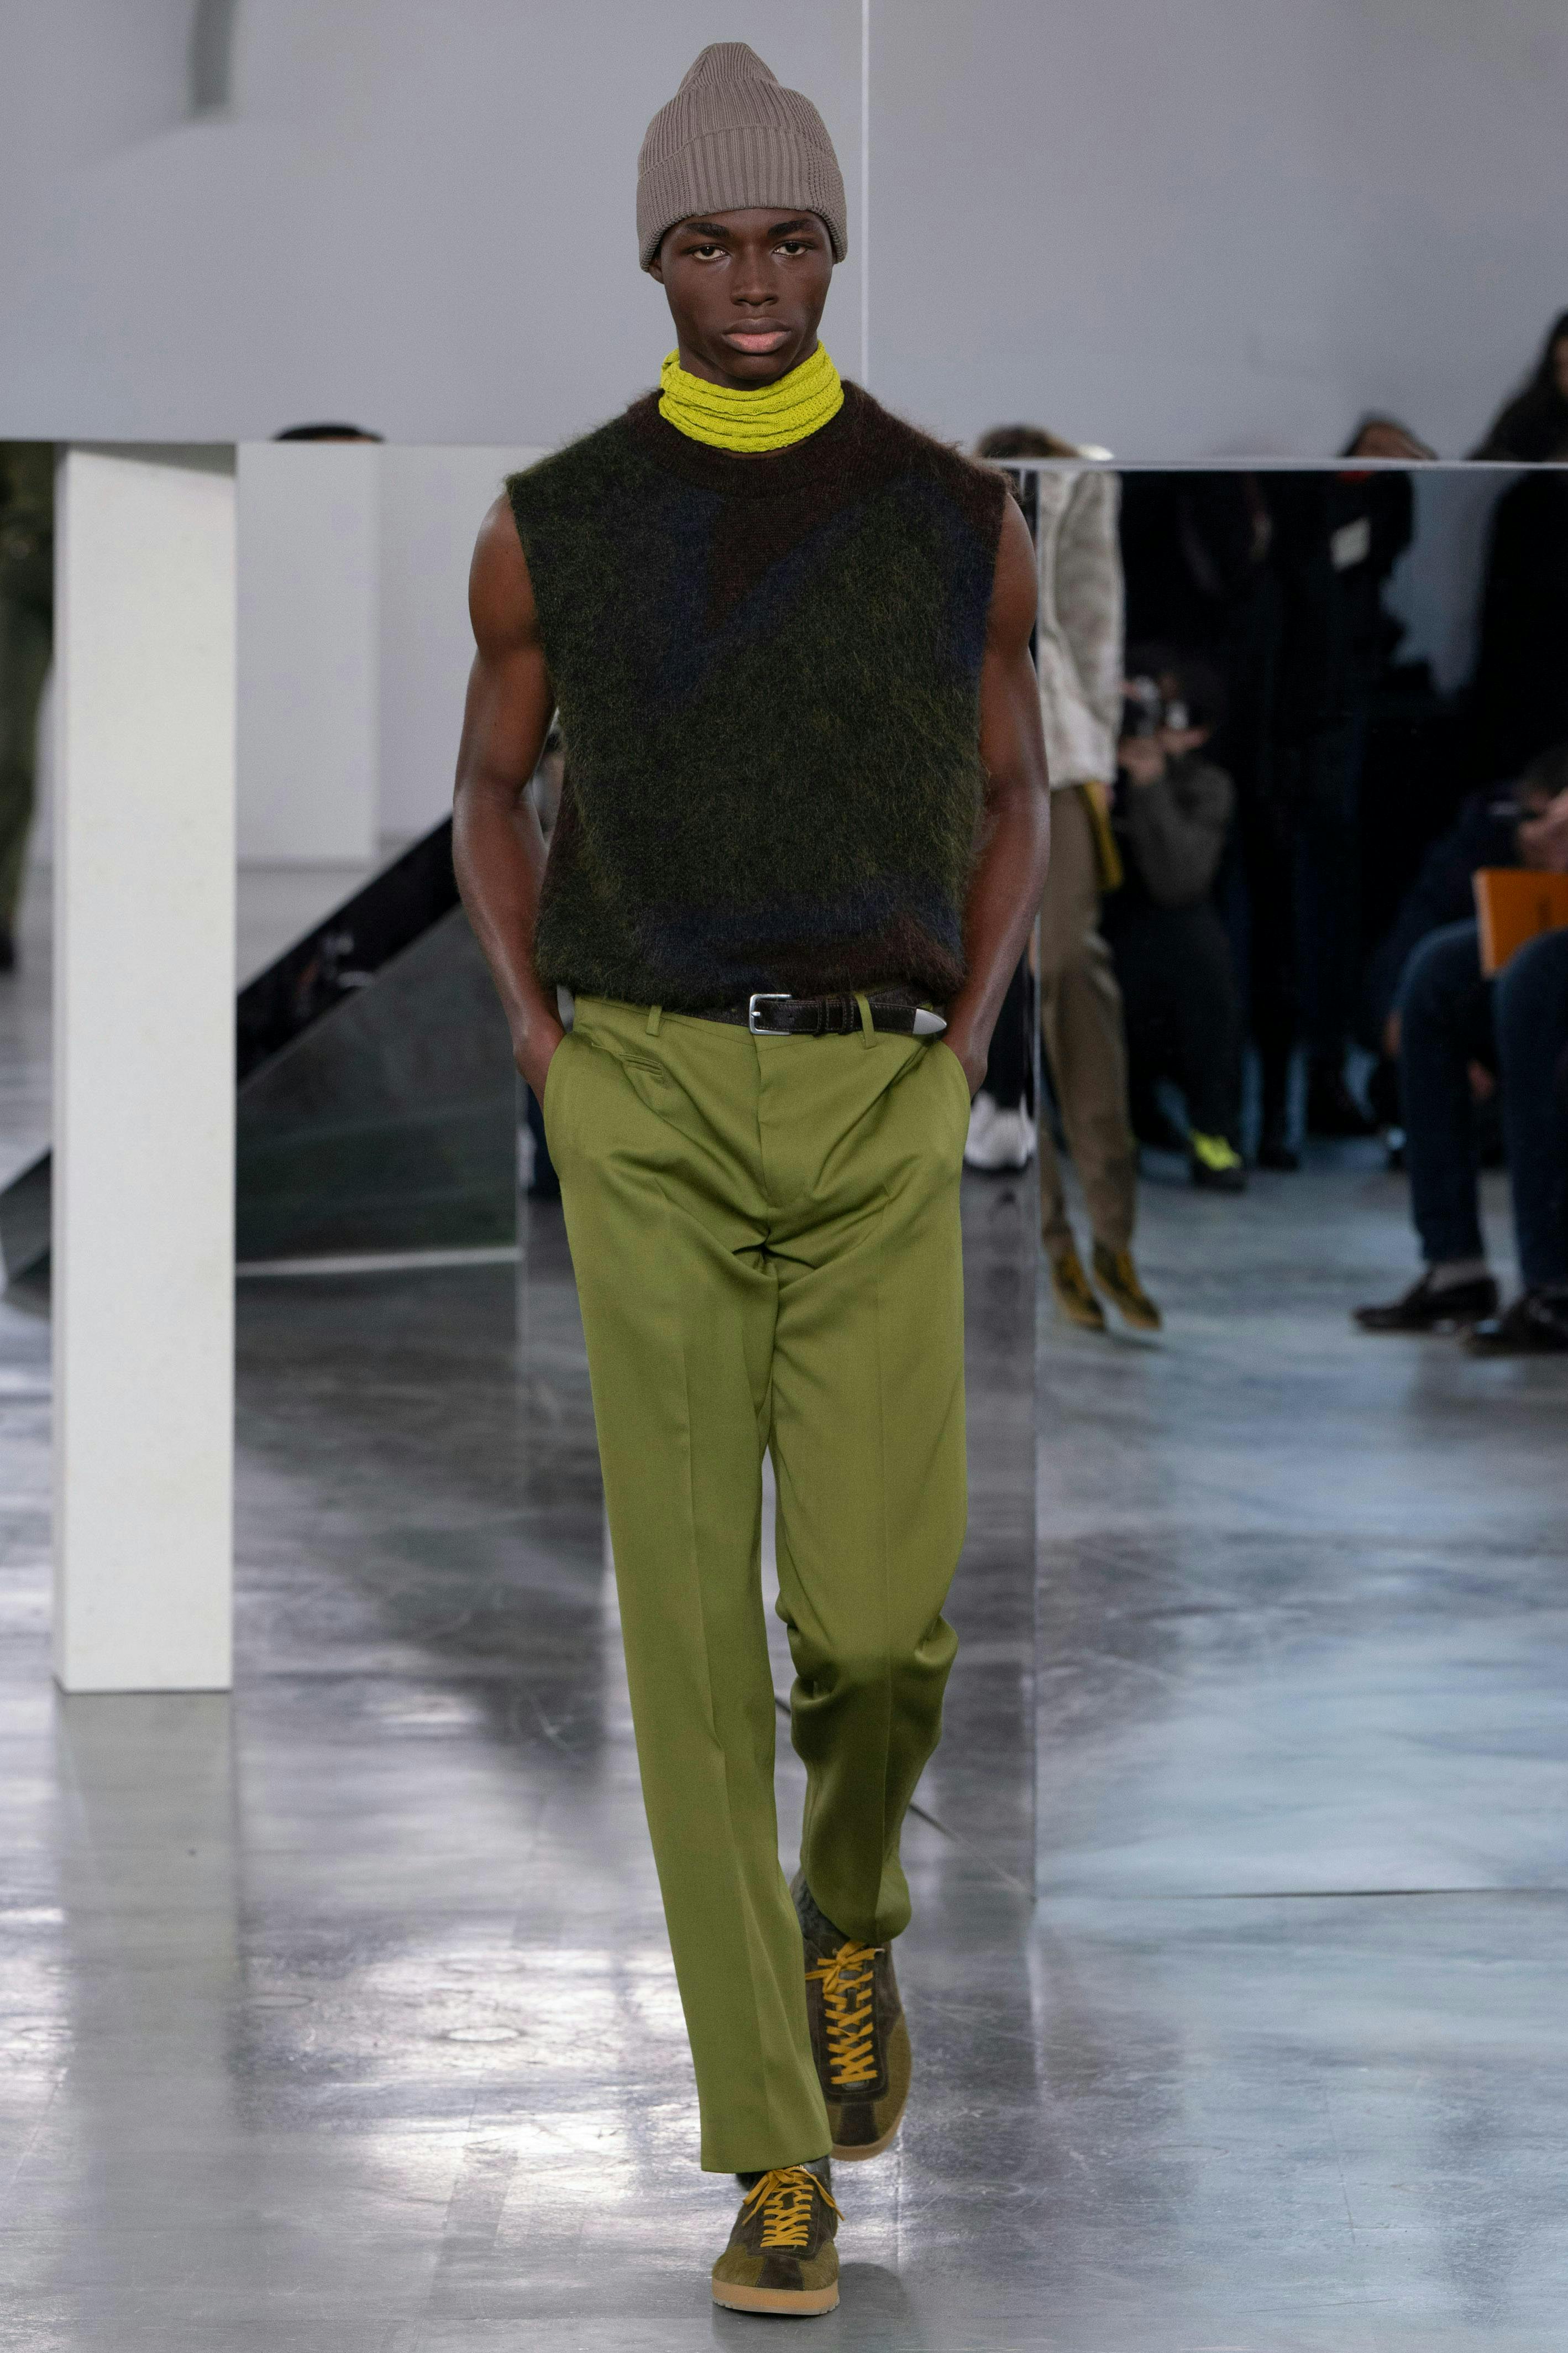 fashion clothing pants adult male man person shoe belt hat